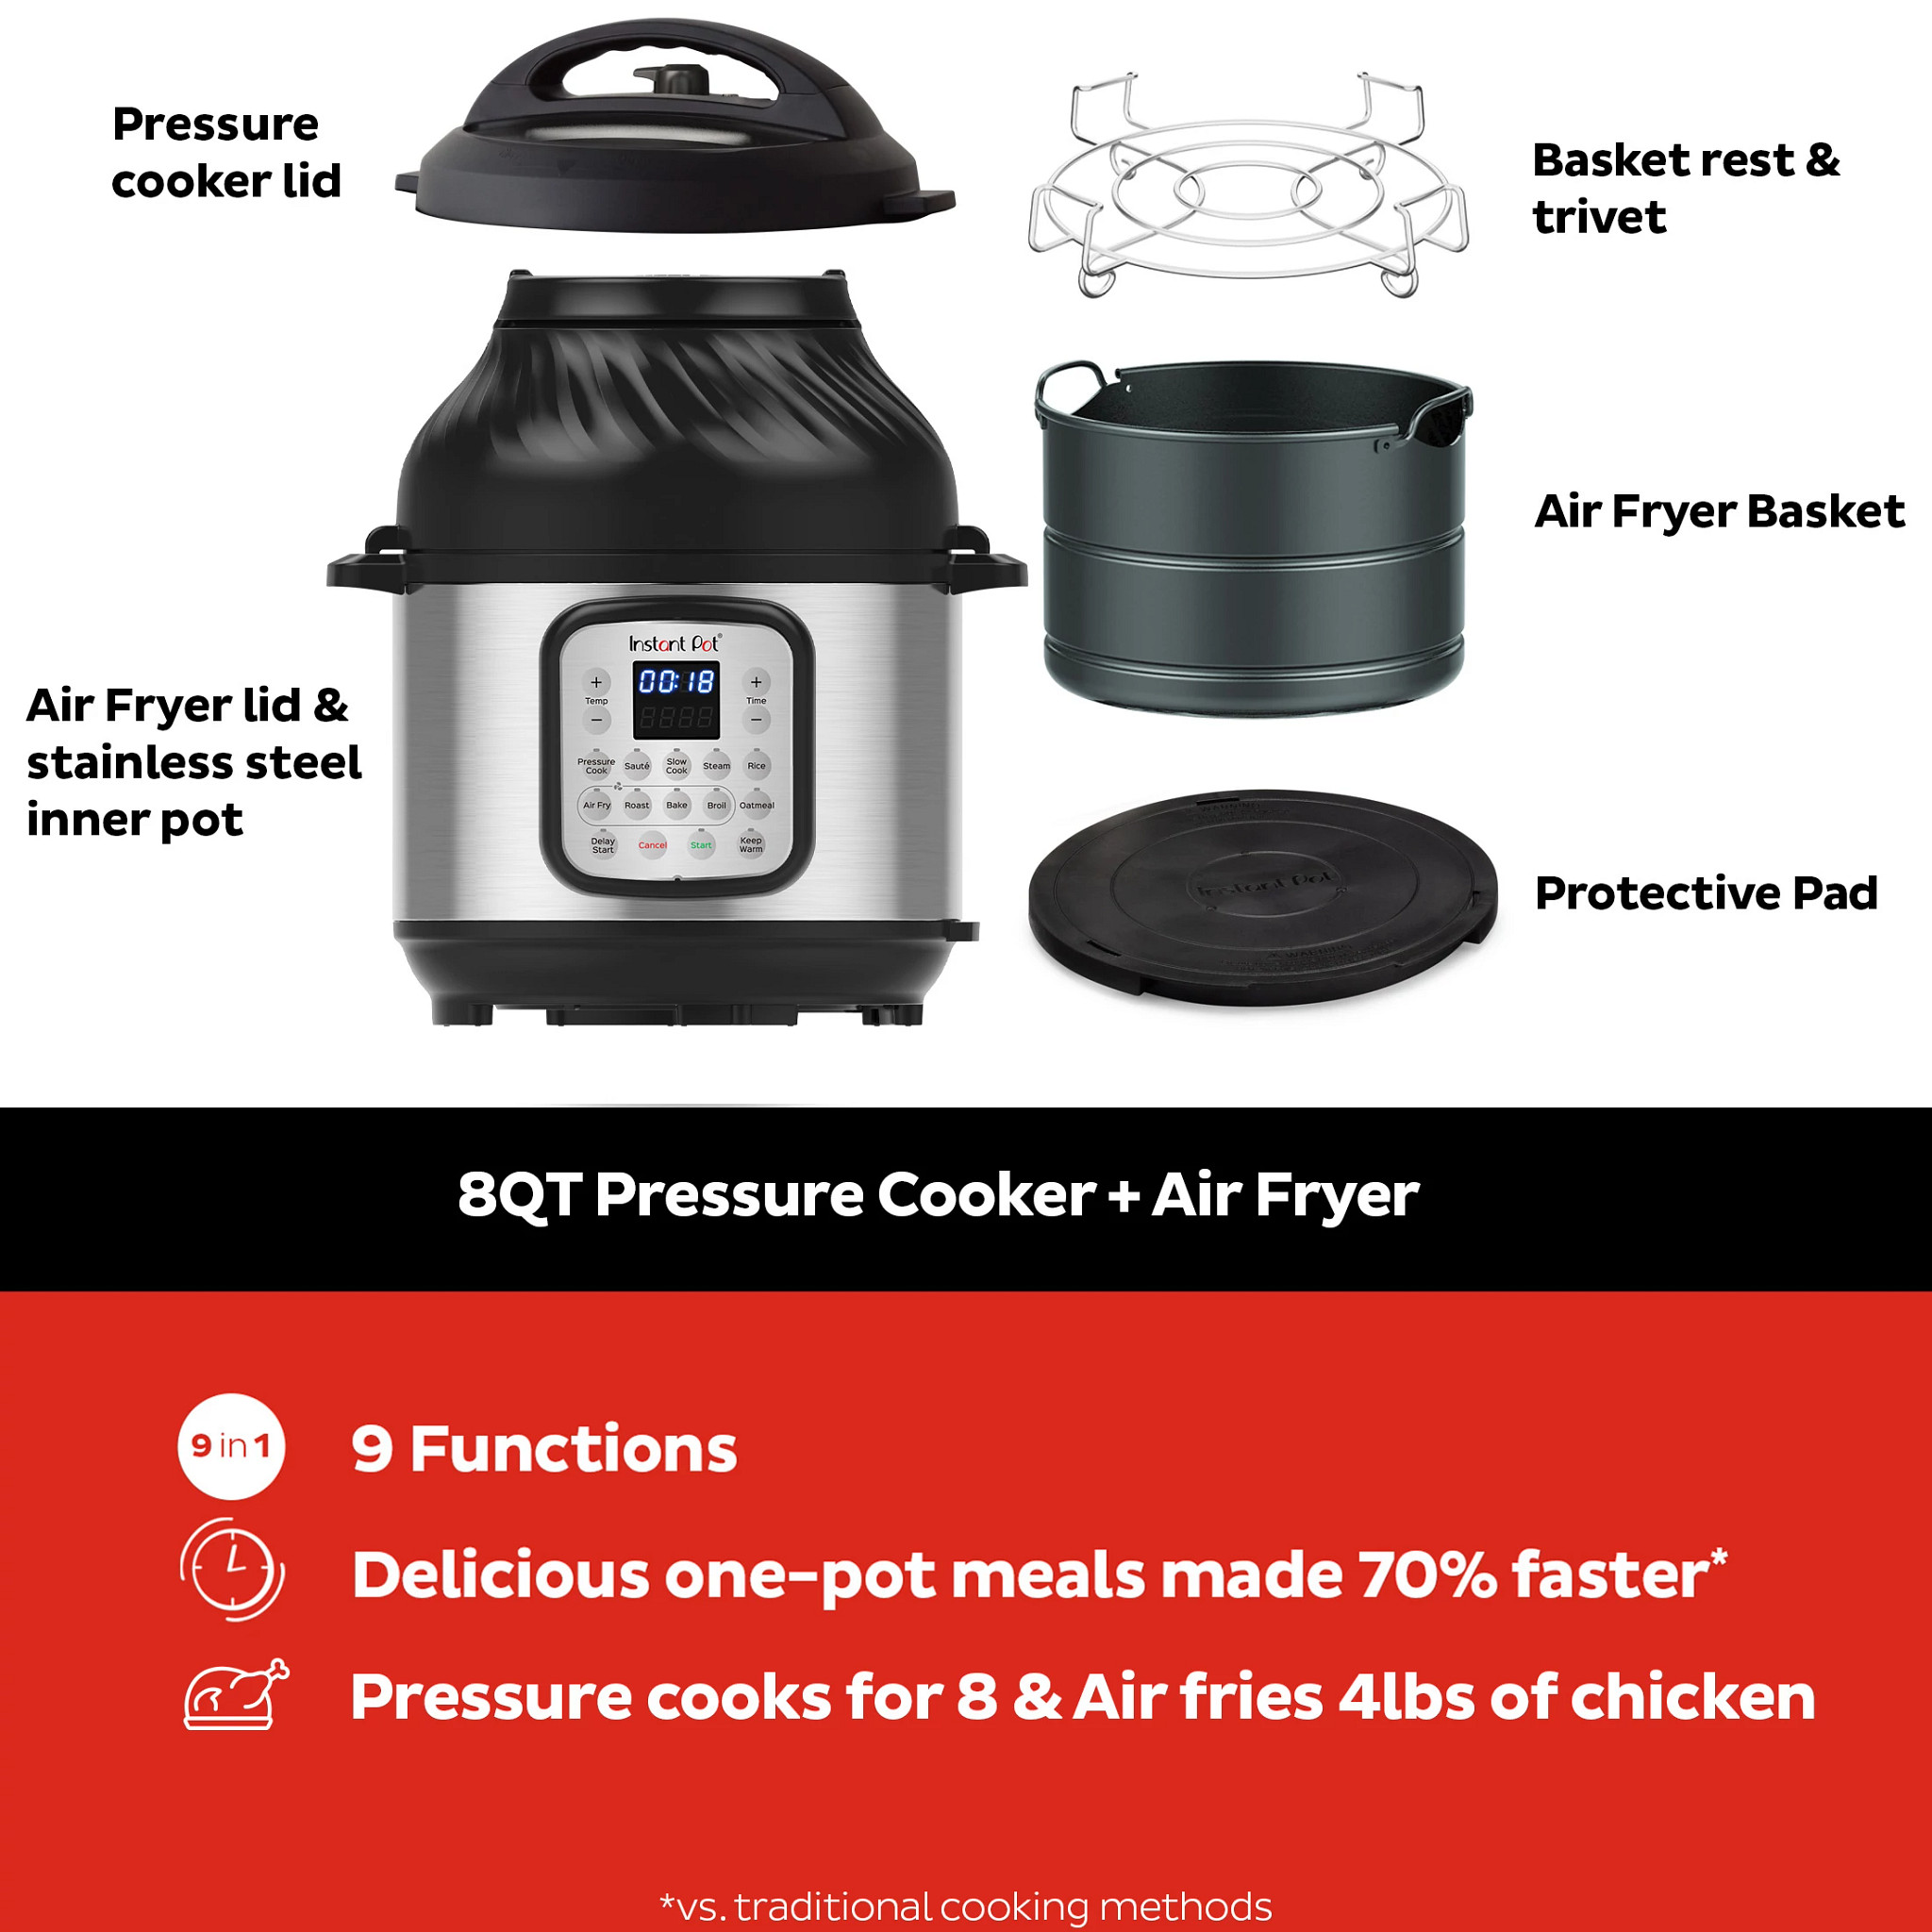 Instant Pot 8 Quart Crisp Multi-Cooker + Air Fryer, 9-in-1: Pressure Cook, Steam, Slow Cook, Sauté, Air Fry, Bake, Broil, Roast, Keep Warm, Rice, Oatmeal - image 3 of 17